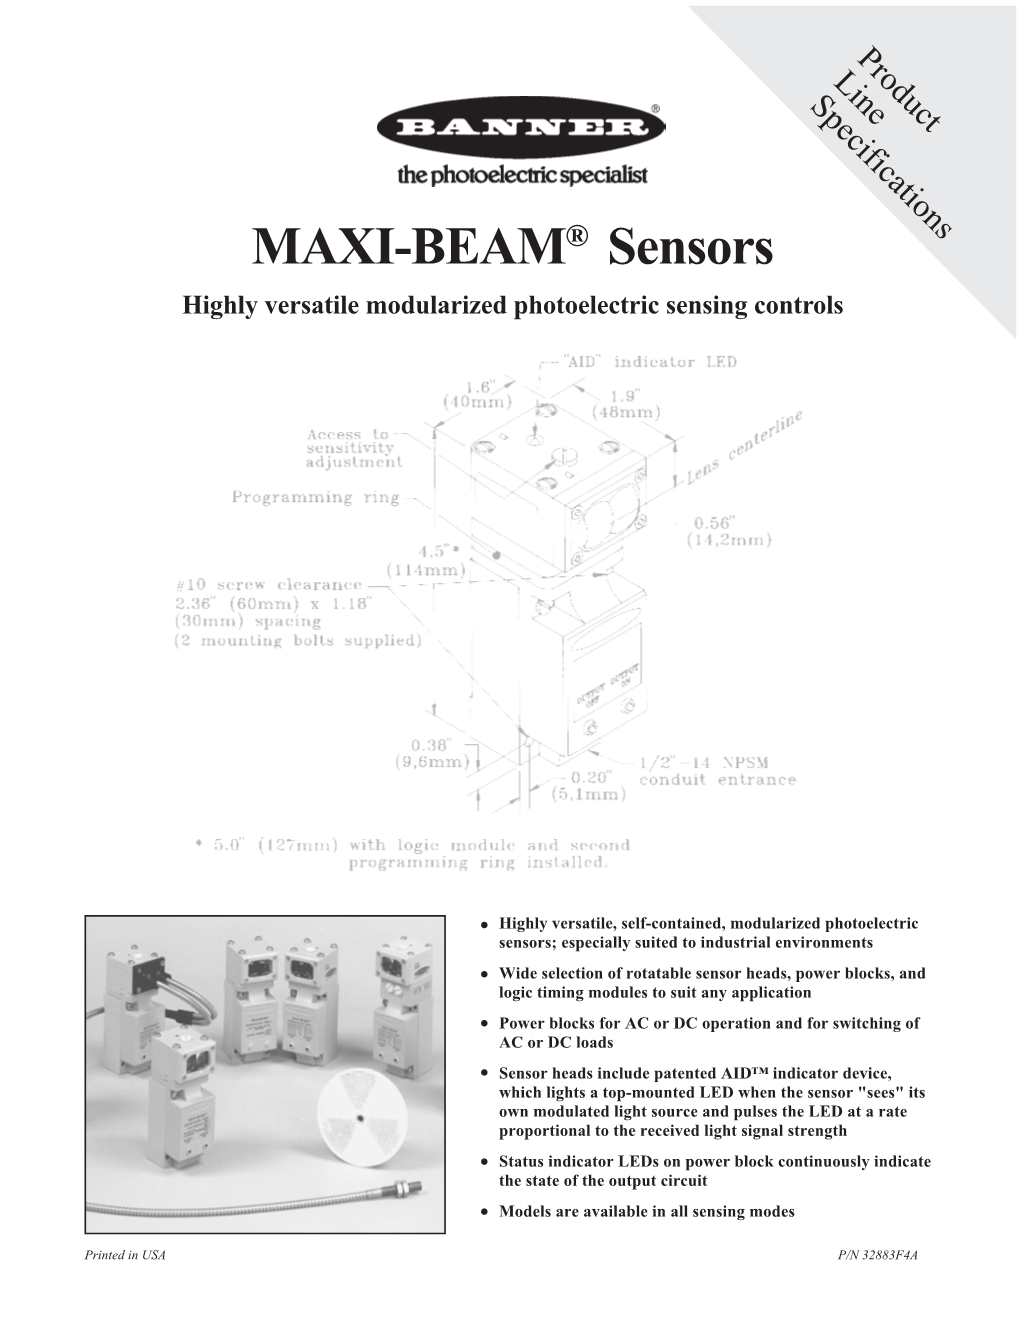 MAXI-BEAM® Sensors Highly Versatile Modularized Photoelectric Sensing Controls